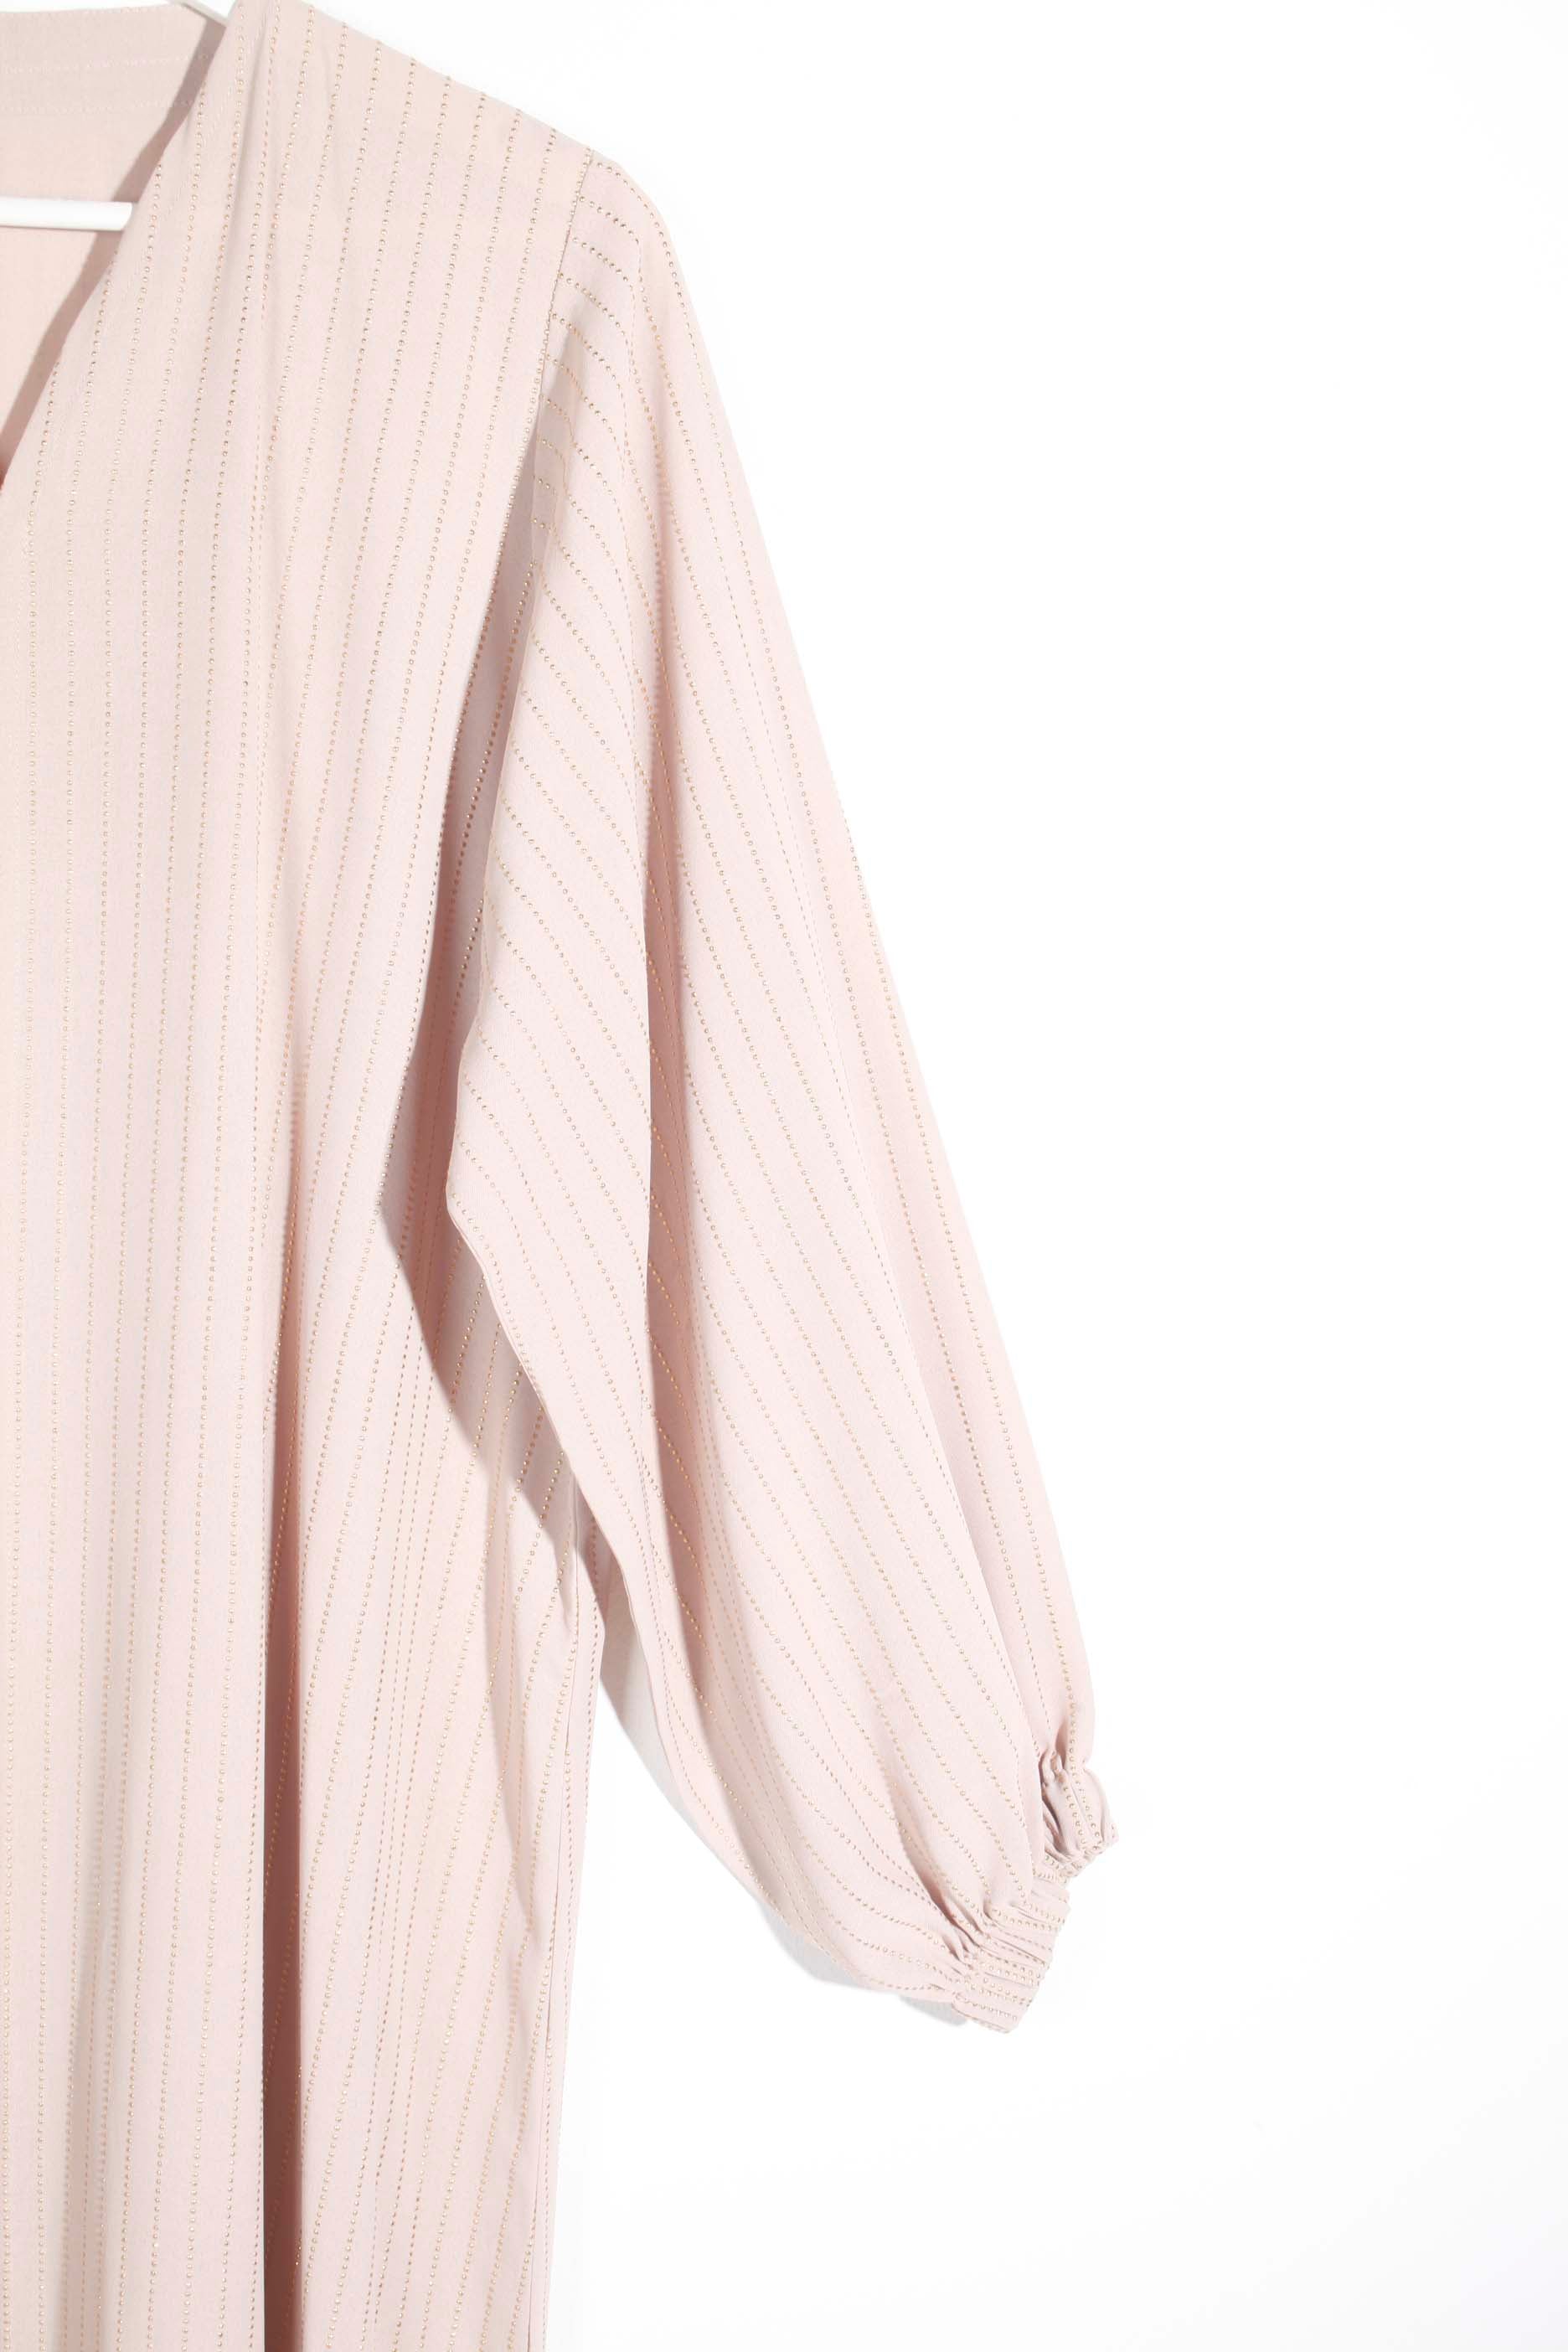 Pale pink abaya with gold pinstripe